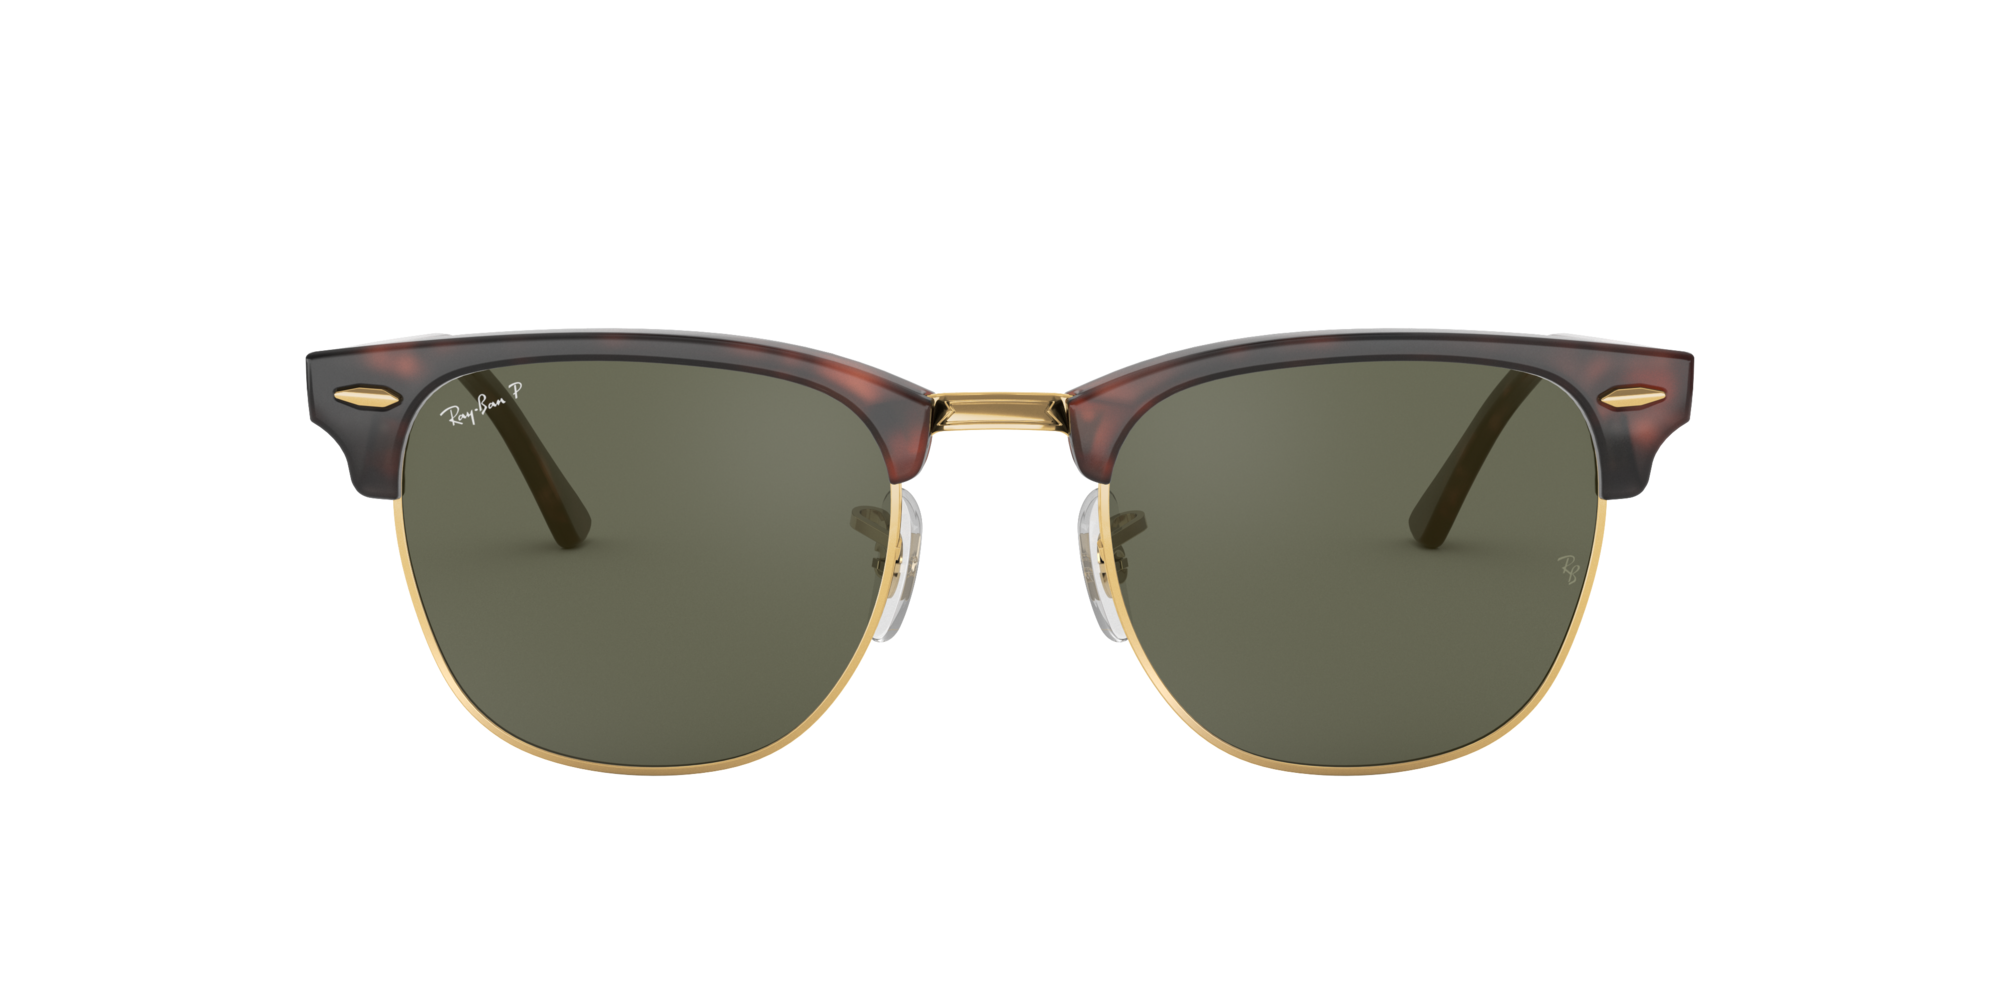 ray ban men's classic sunglasses